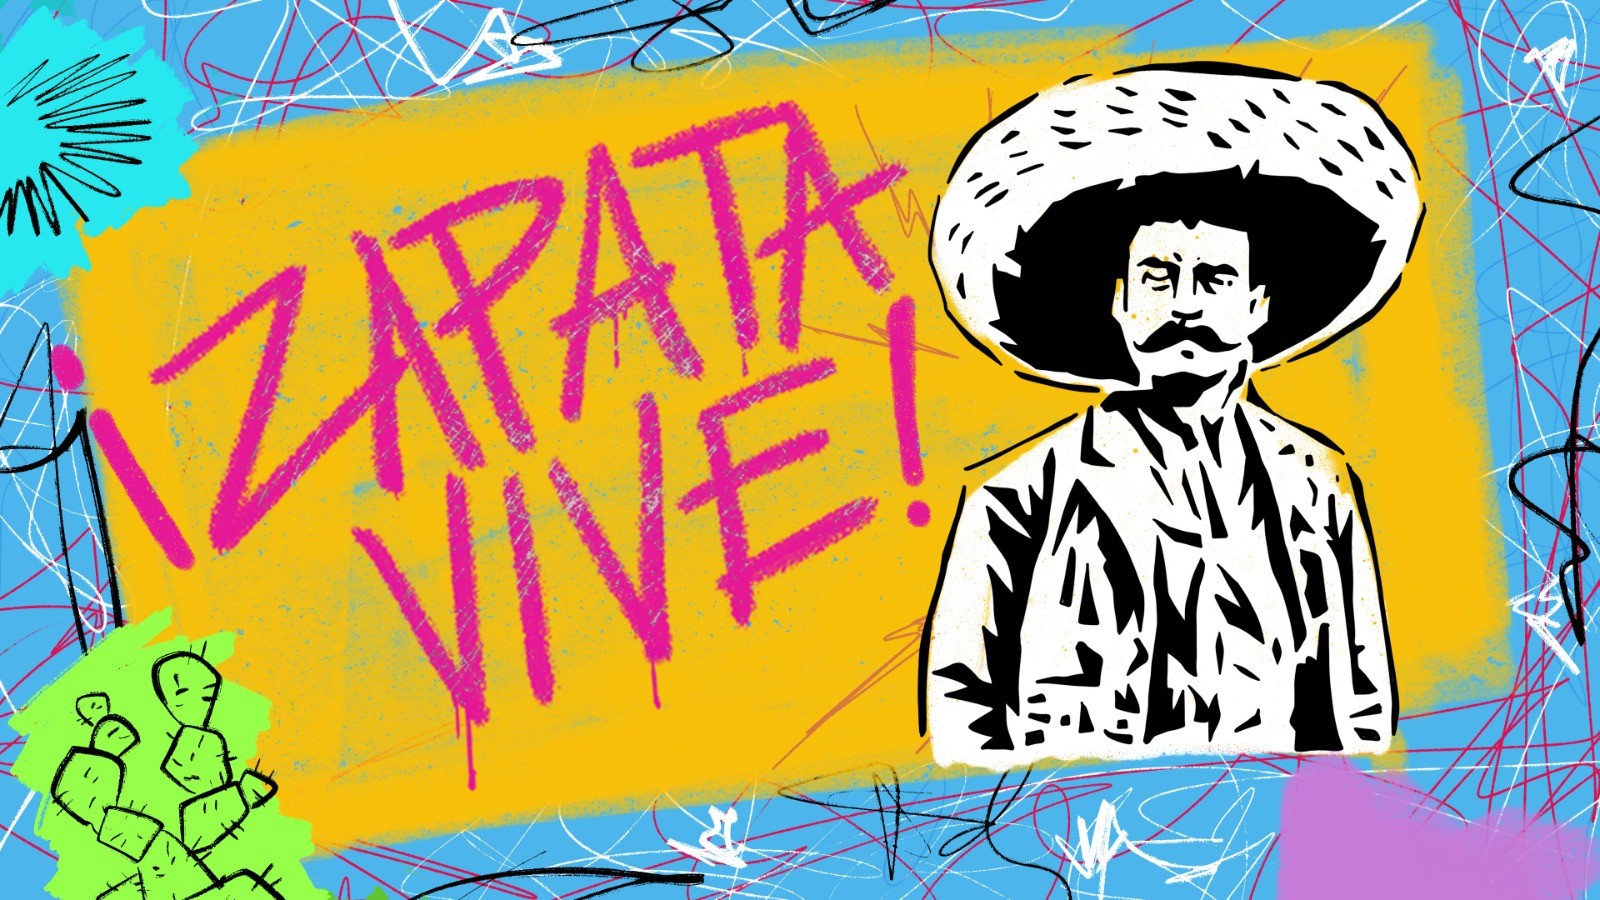 ¡Zapata vive!